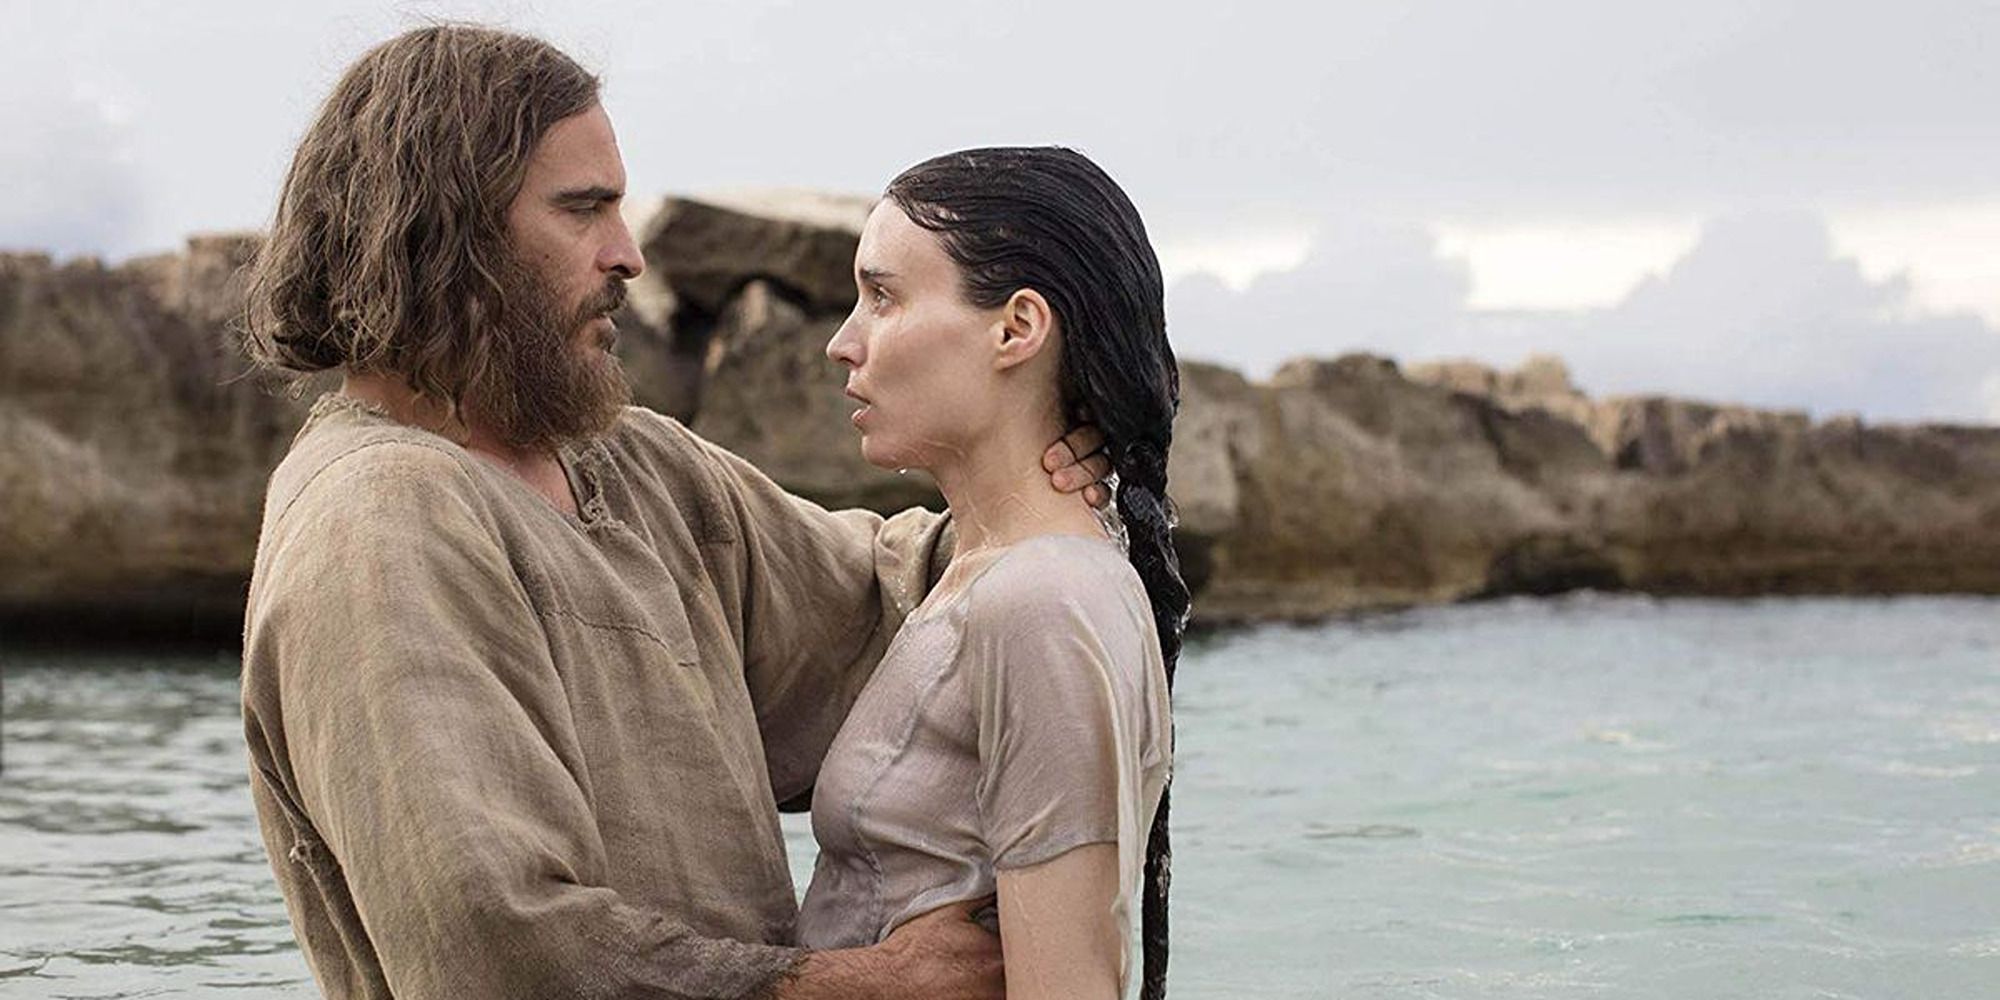 Joaquin Phoenix baptizing Rooney Mara in a river